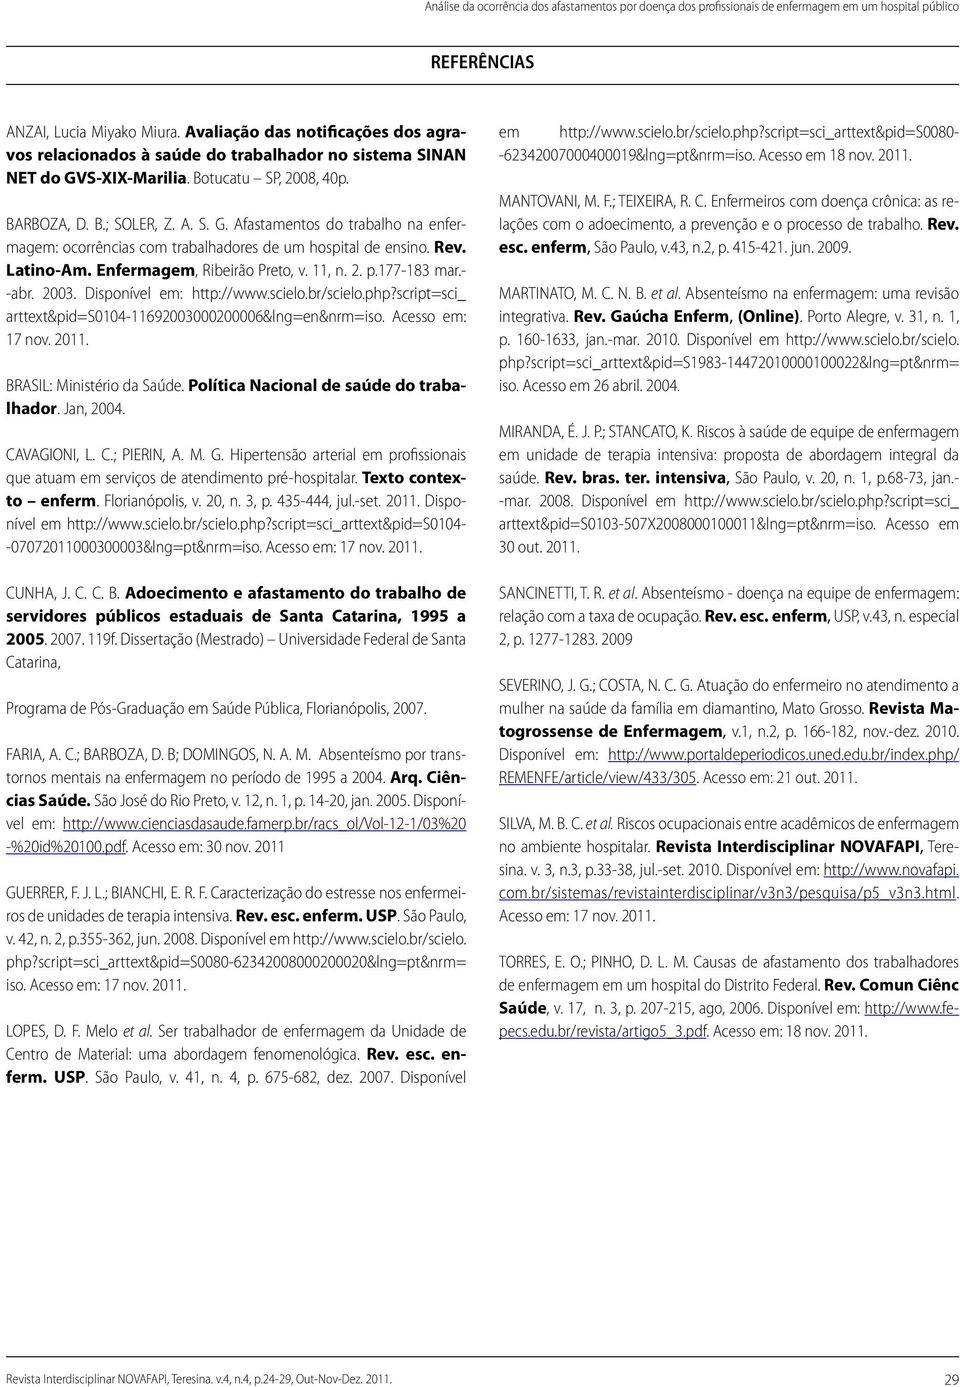 Rev. Latino-Am. Enfermagem, Ribeirão Preto, v. 11, n. 2. p.177-183 mar.- -abr. 2003. Disponível em: http://www.scielo.br/scielo.php?script=sci_ arttext&pid=s0104-11692003000200006&lng=en&nrm=iso.